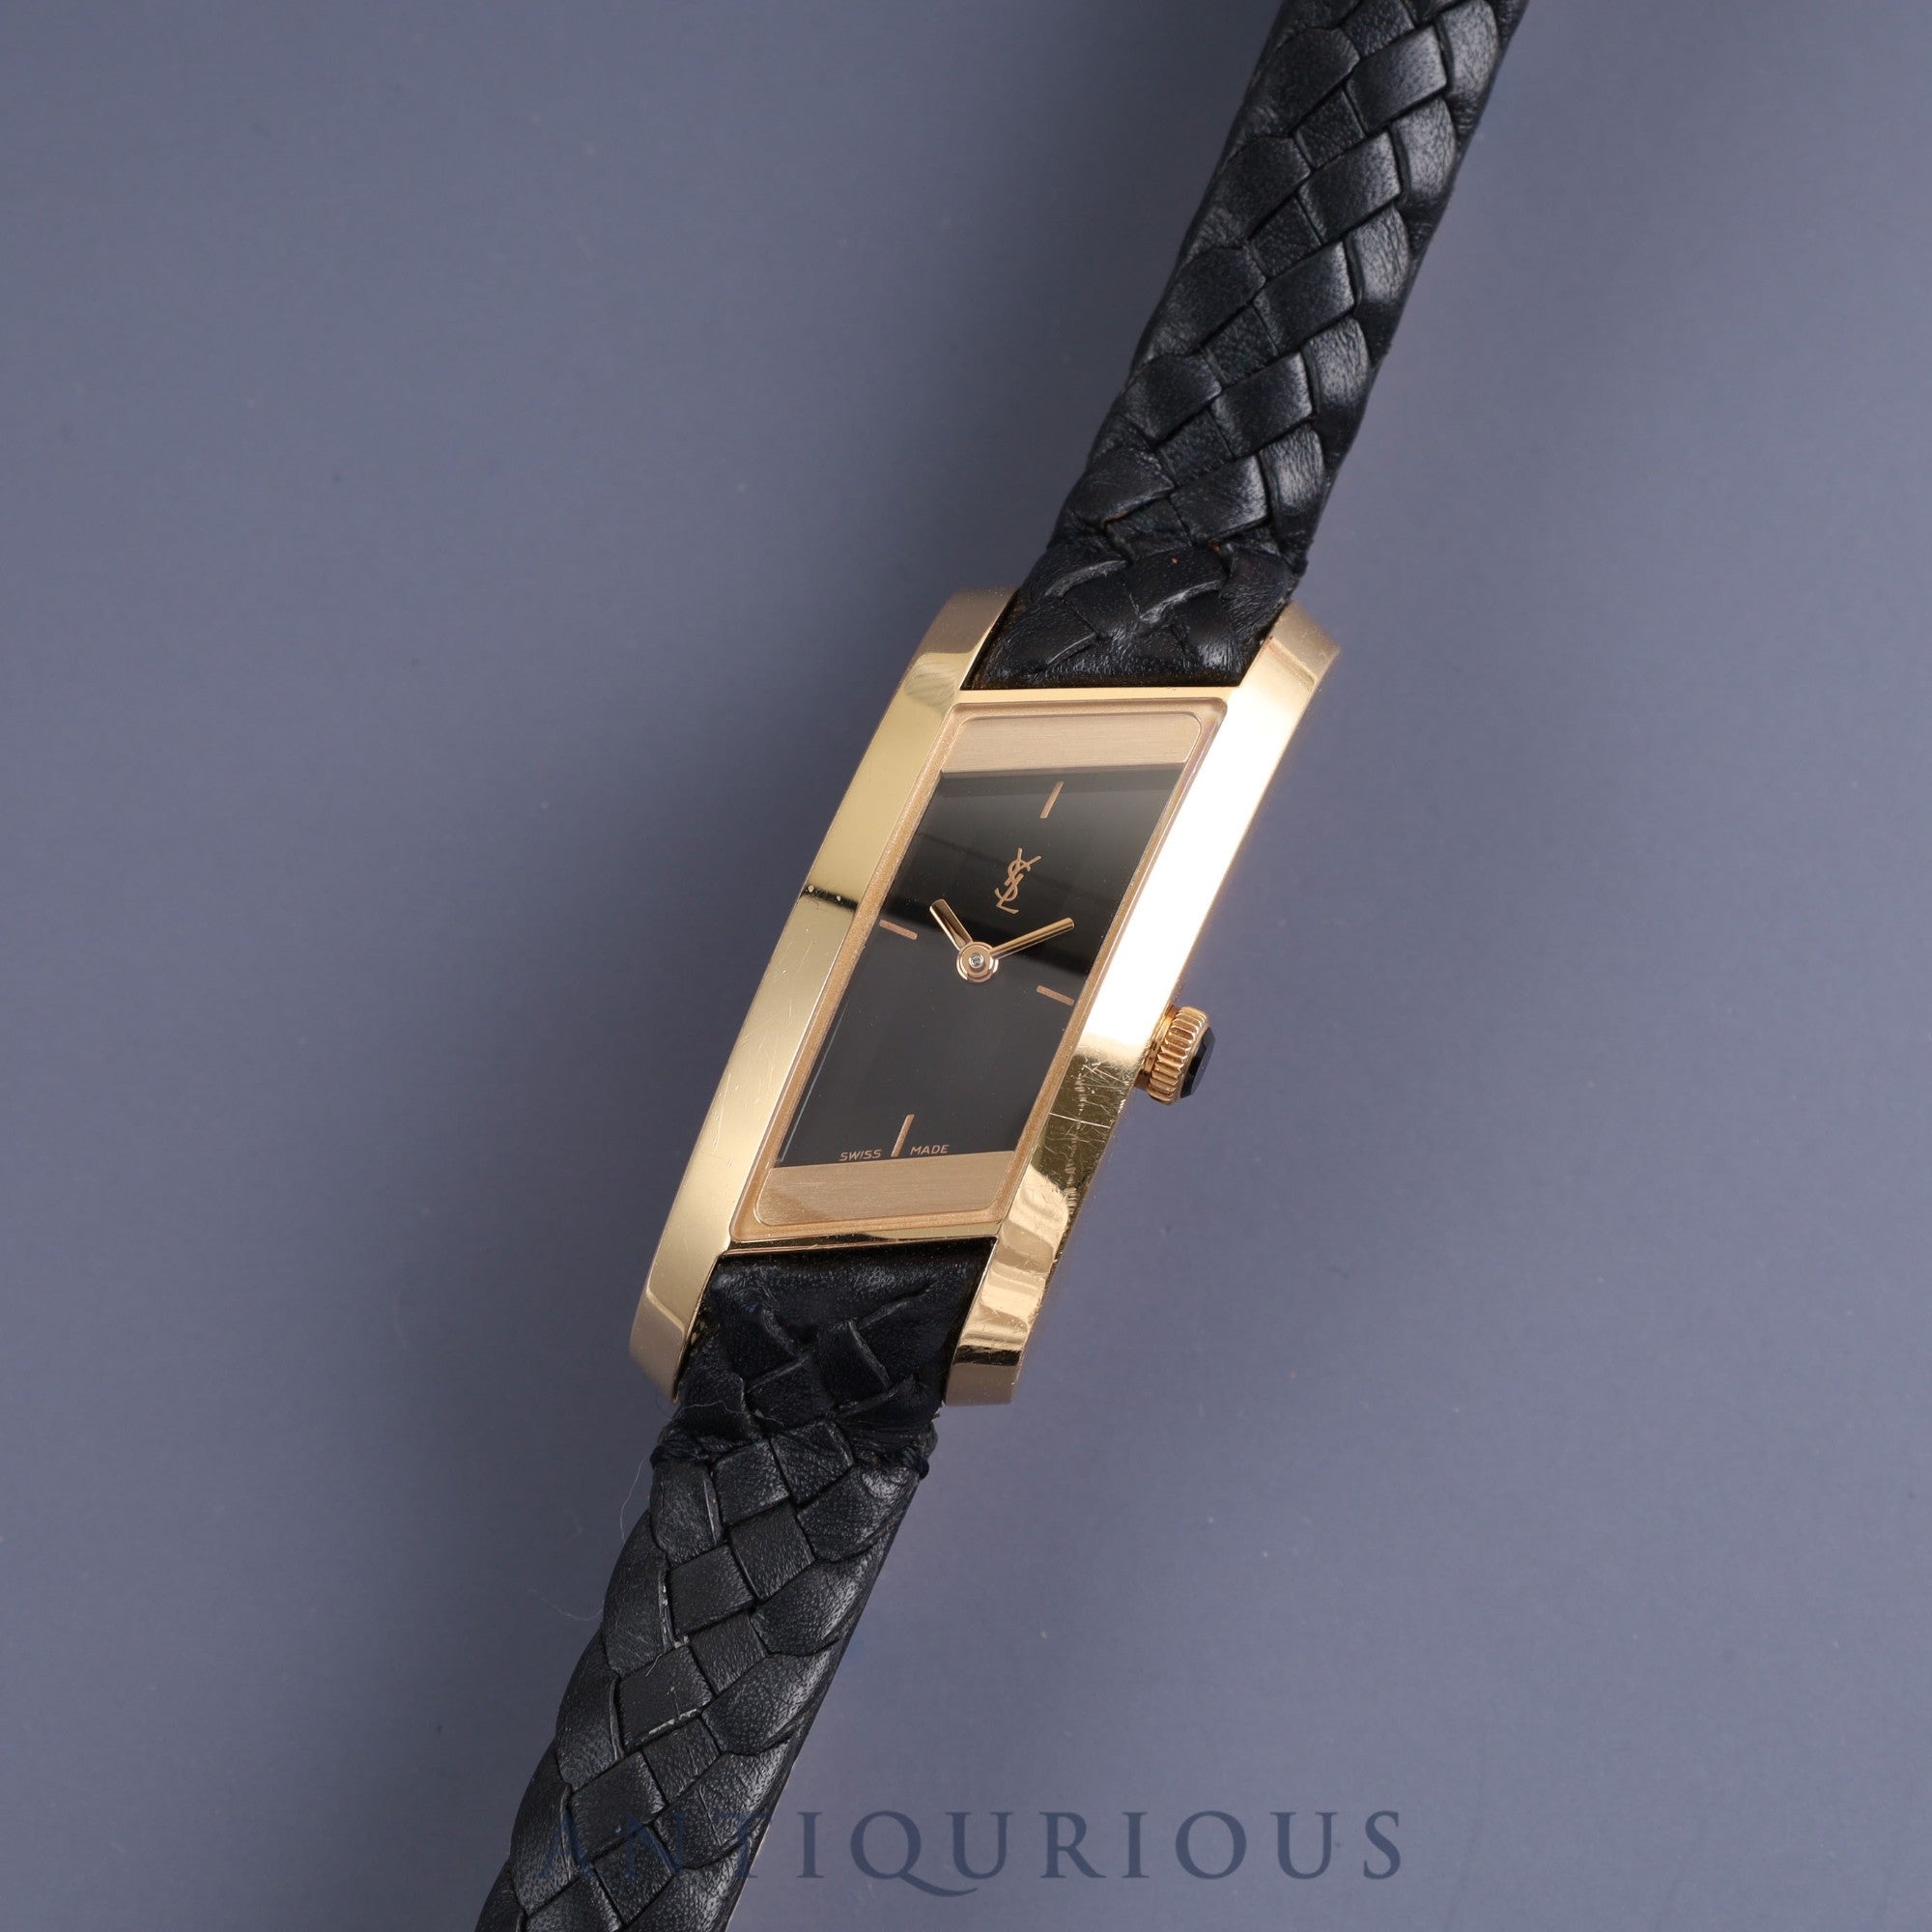 YVES SAINT LAURENT(イヴ・サンローラン)の中古腕時計一覧 | 東京銀座のヴィンテージウォッチ専門店 -  ANTIQURIOUS(アンティキュリオス)